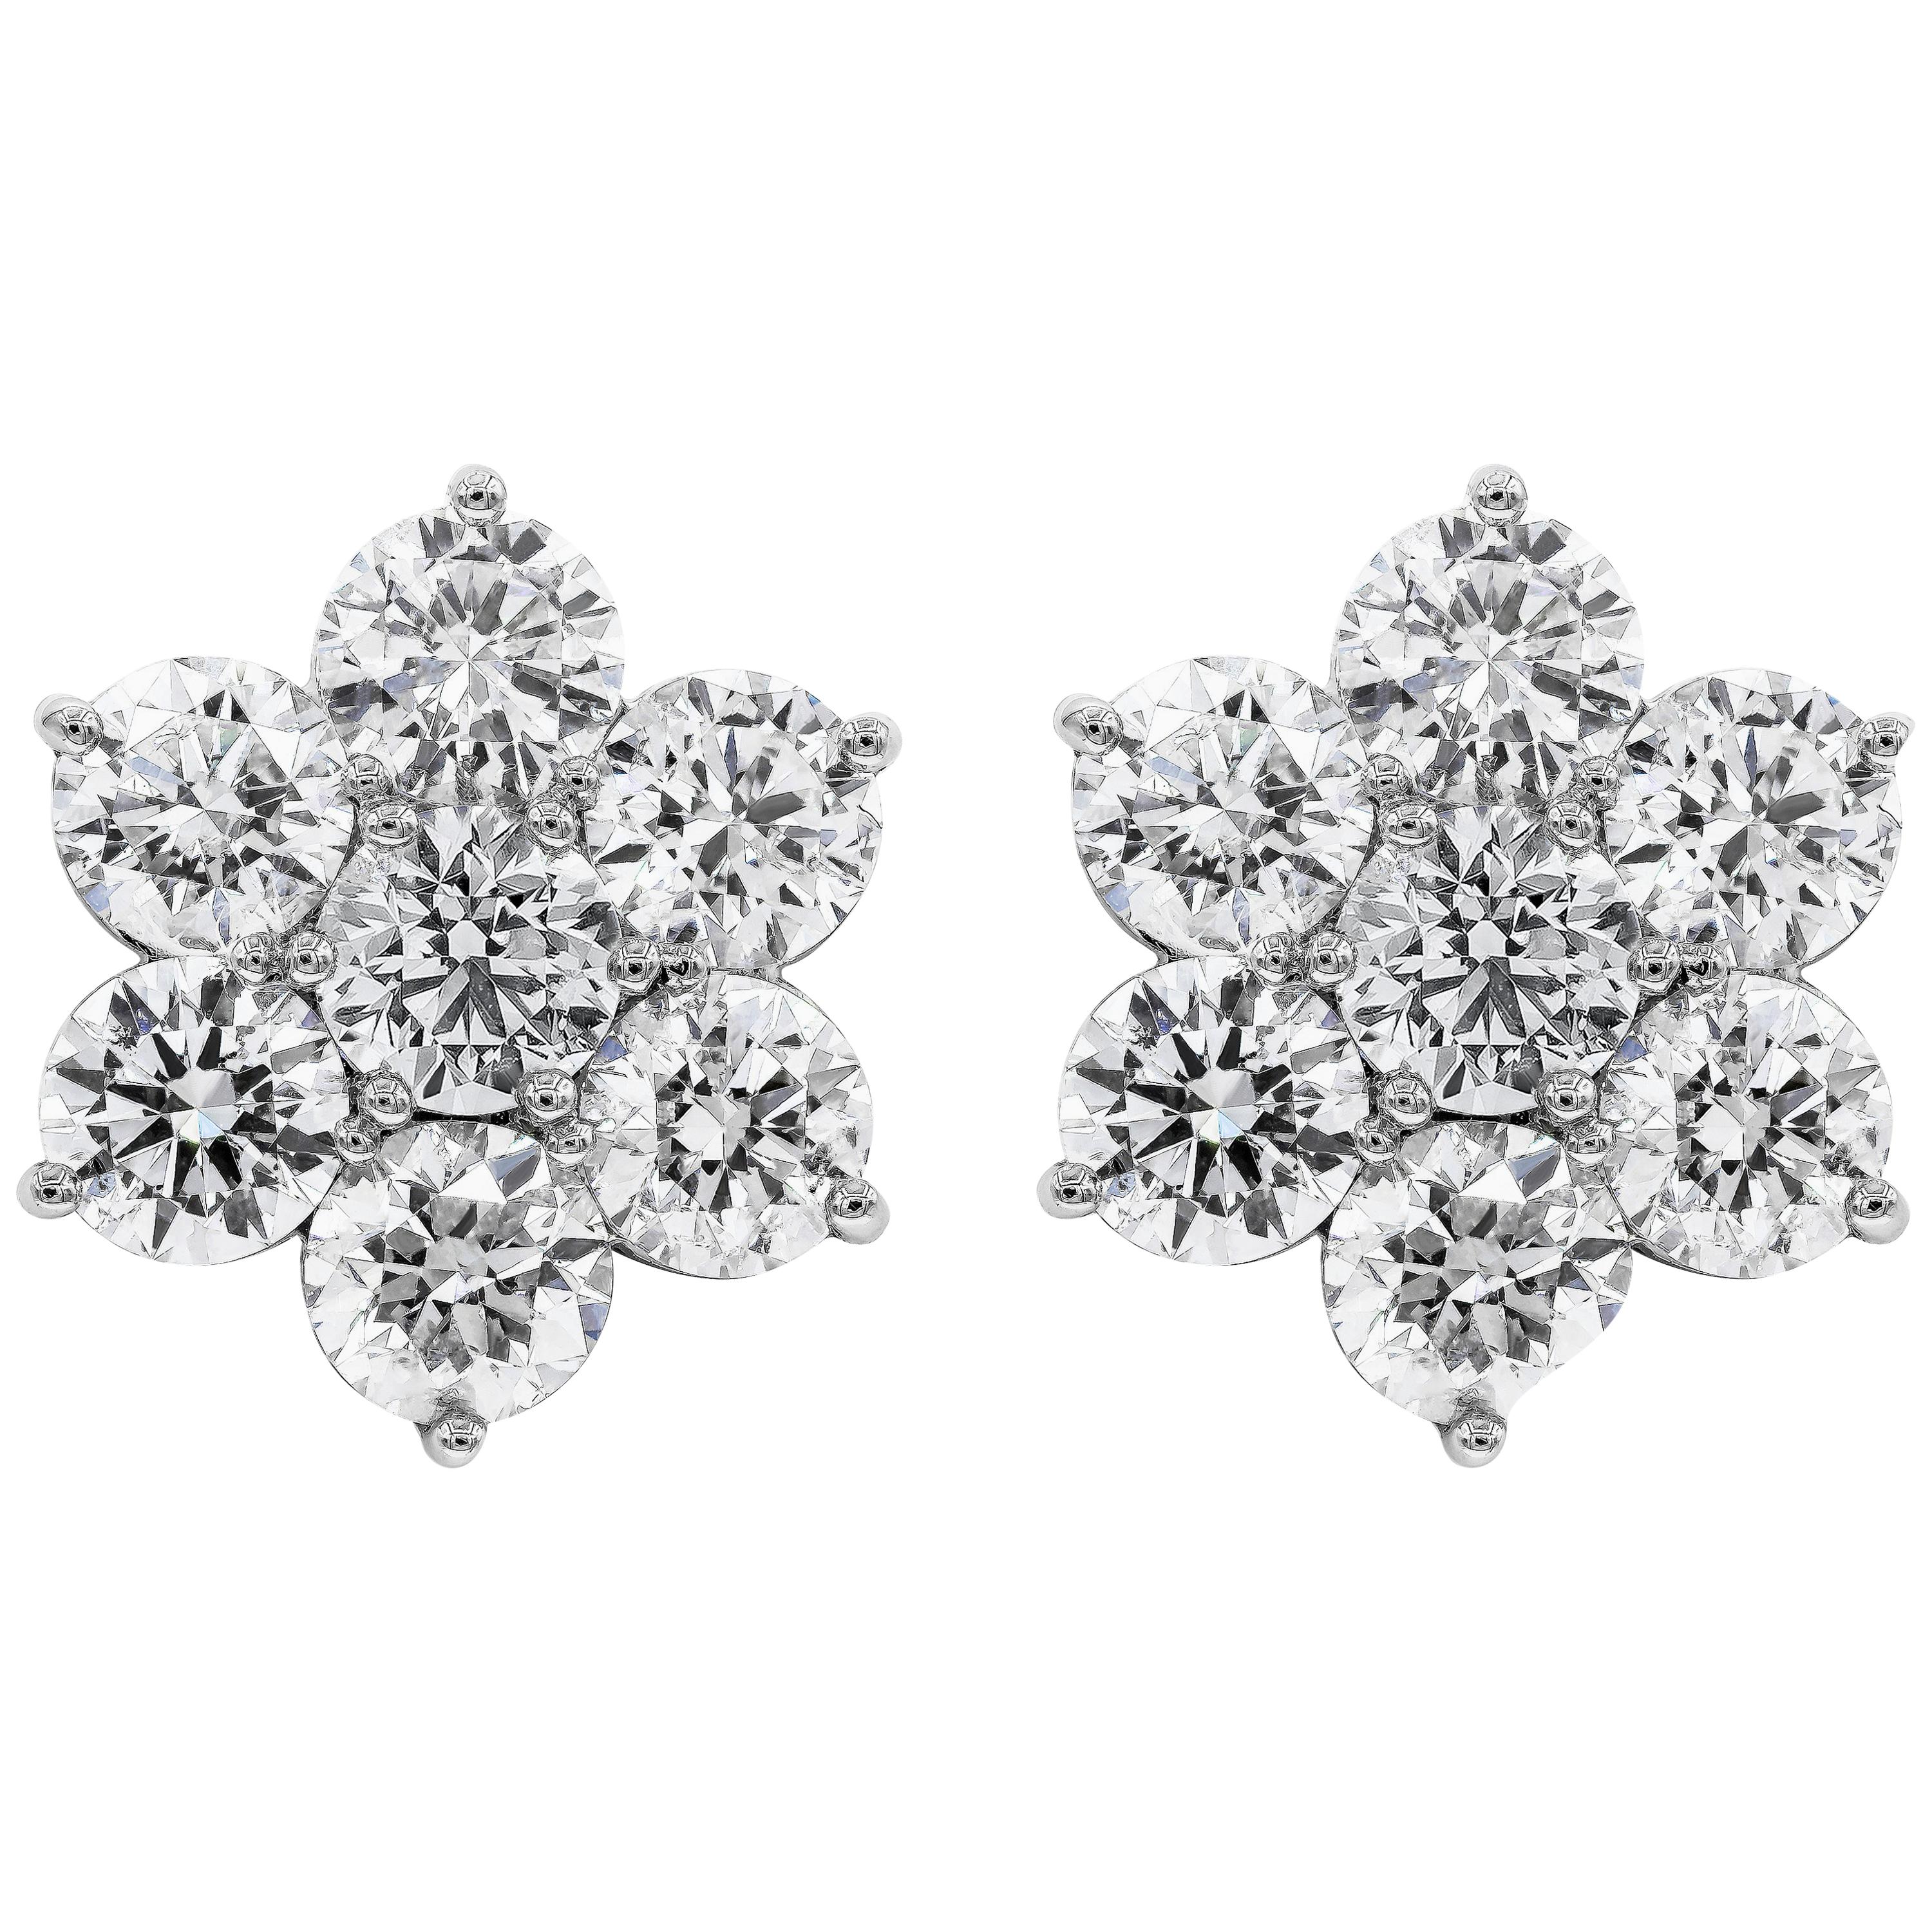 Roman Malakov 7.48 Carats Total Brilliant Round Cut Diamond Flower Stud Earrings For Sale